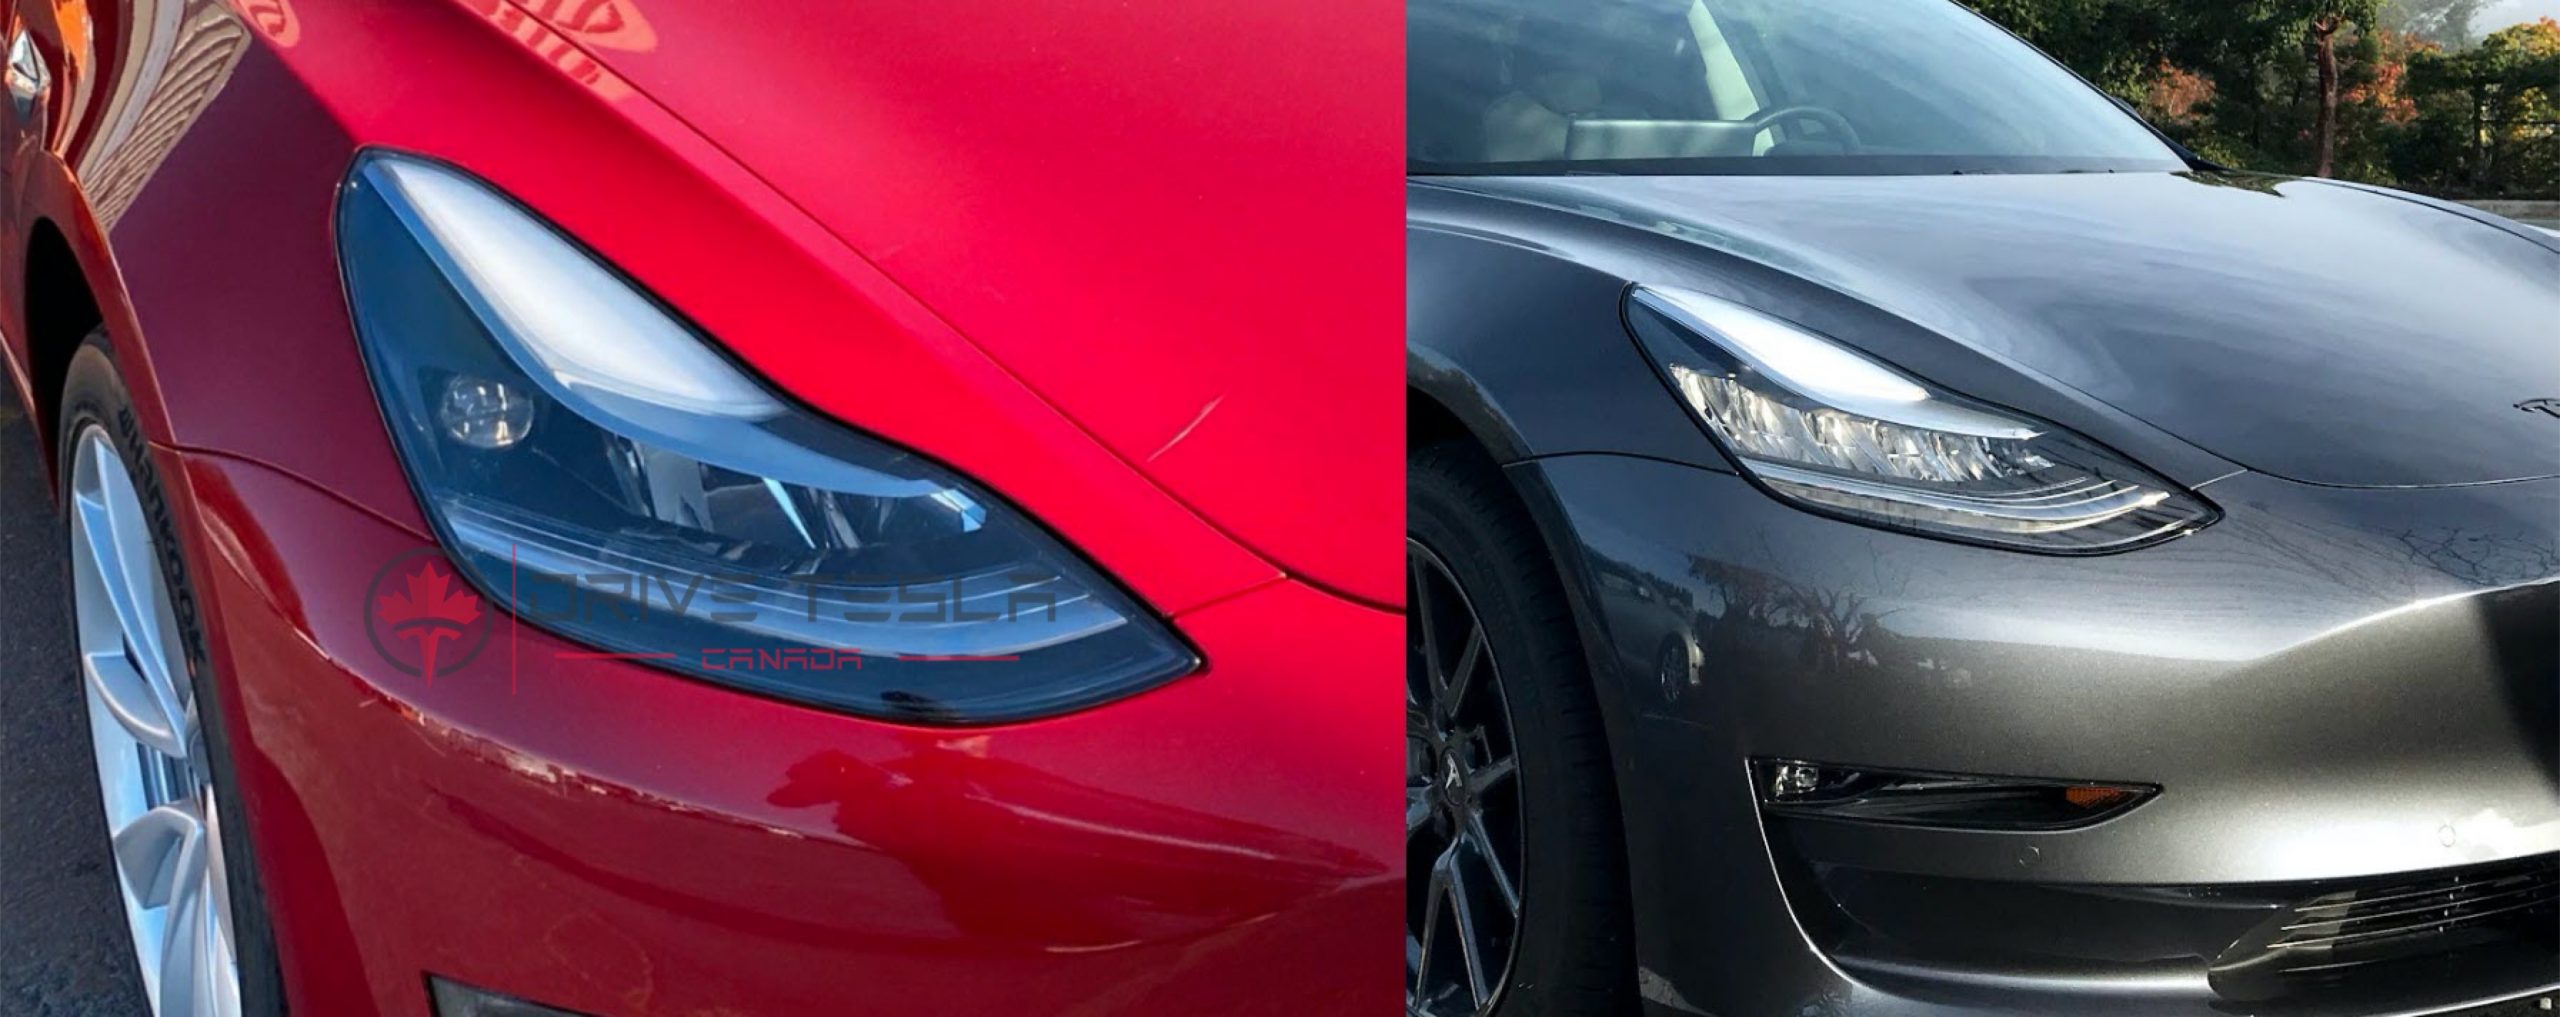 New-vs-old-Tesla-Model-3-headlights